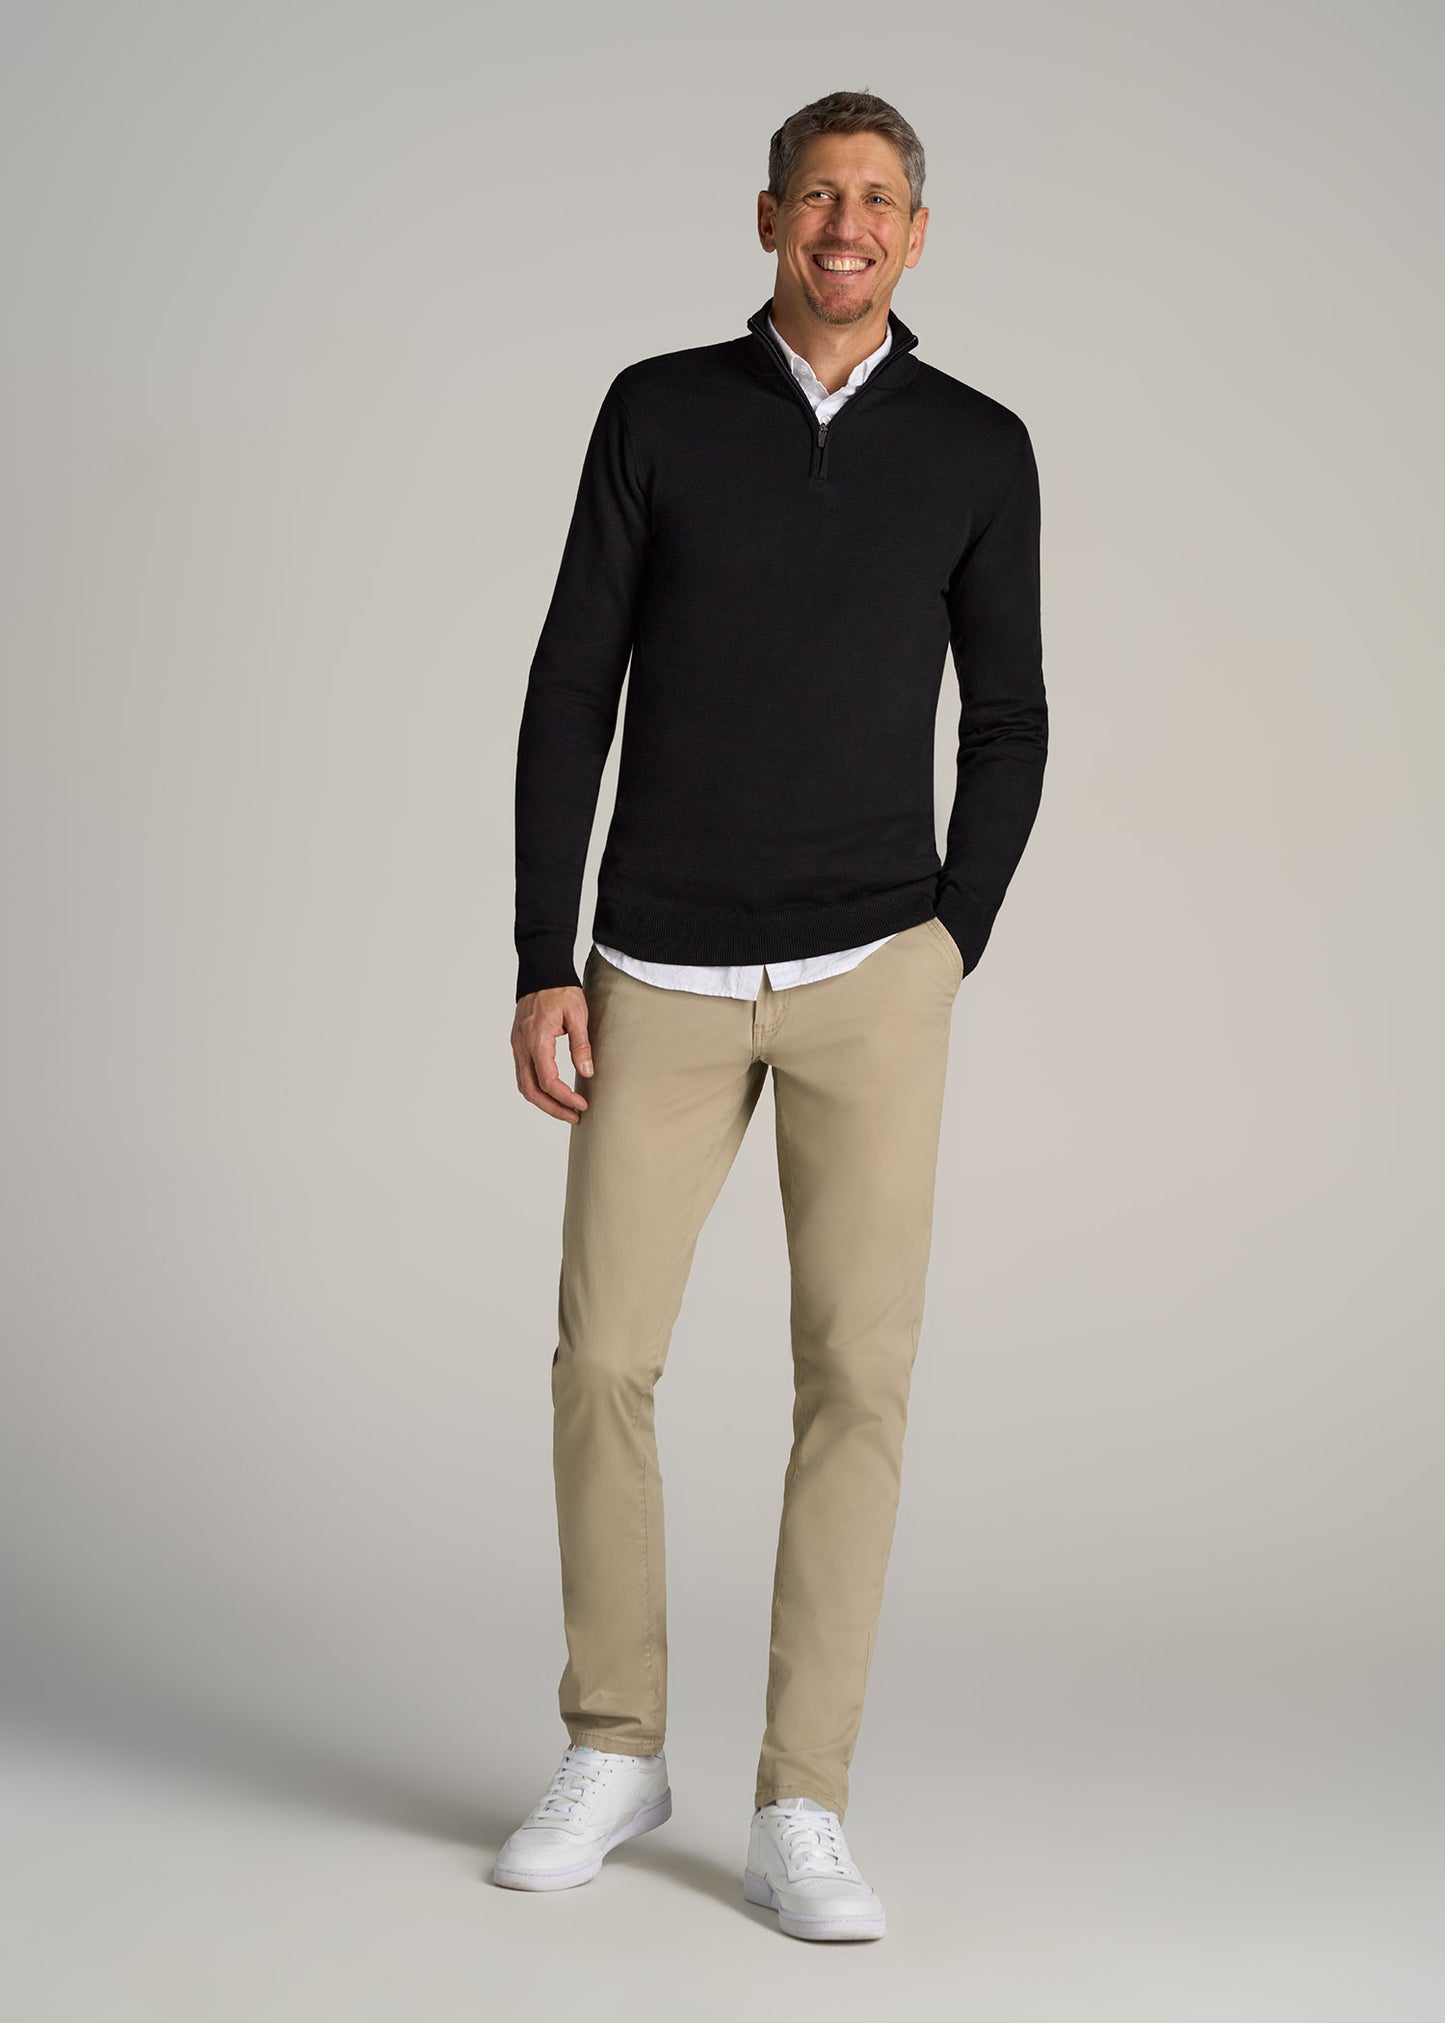       American-Tall-Men-Quarter-Zip-Sweater-Black-full